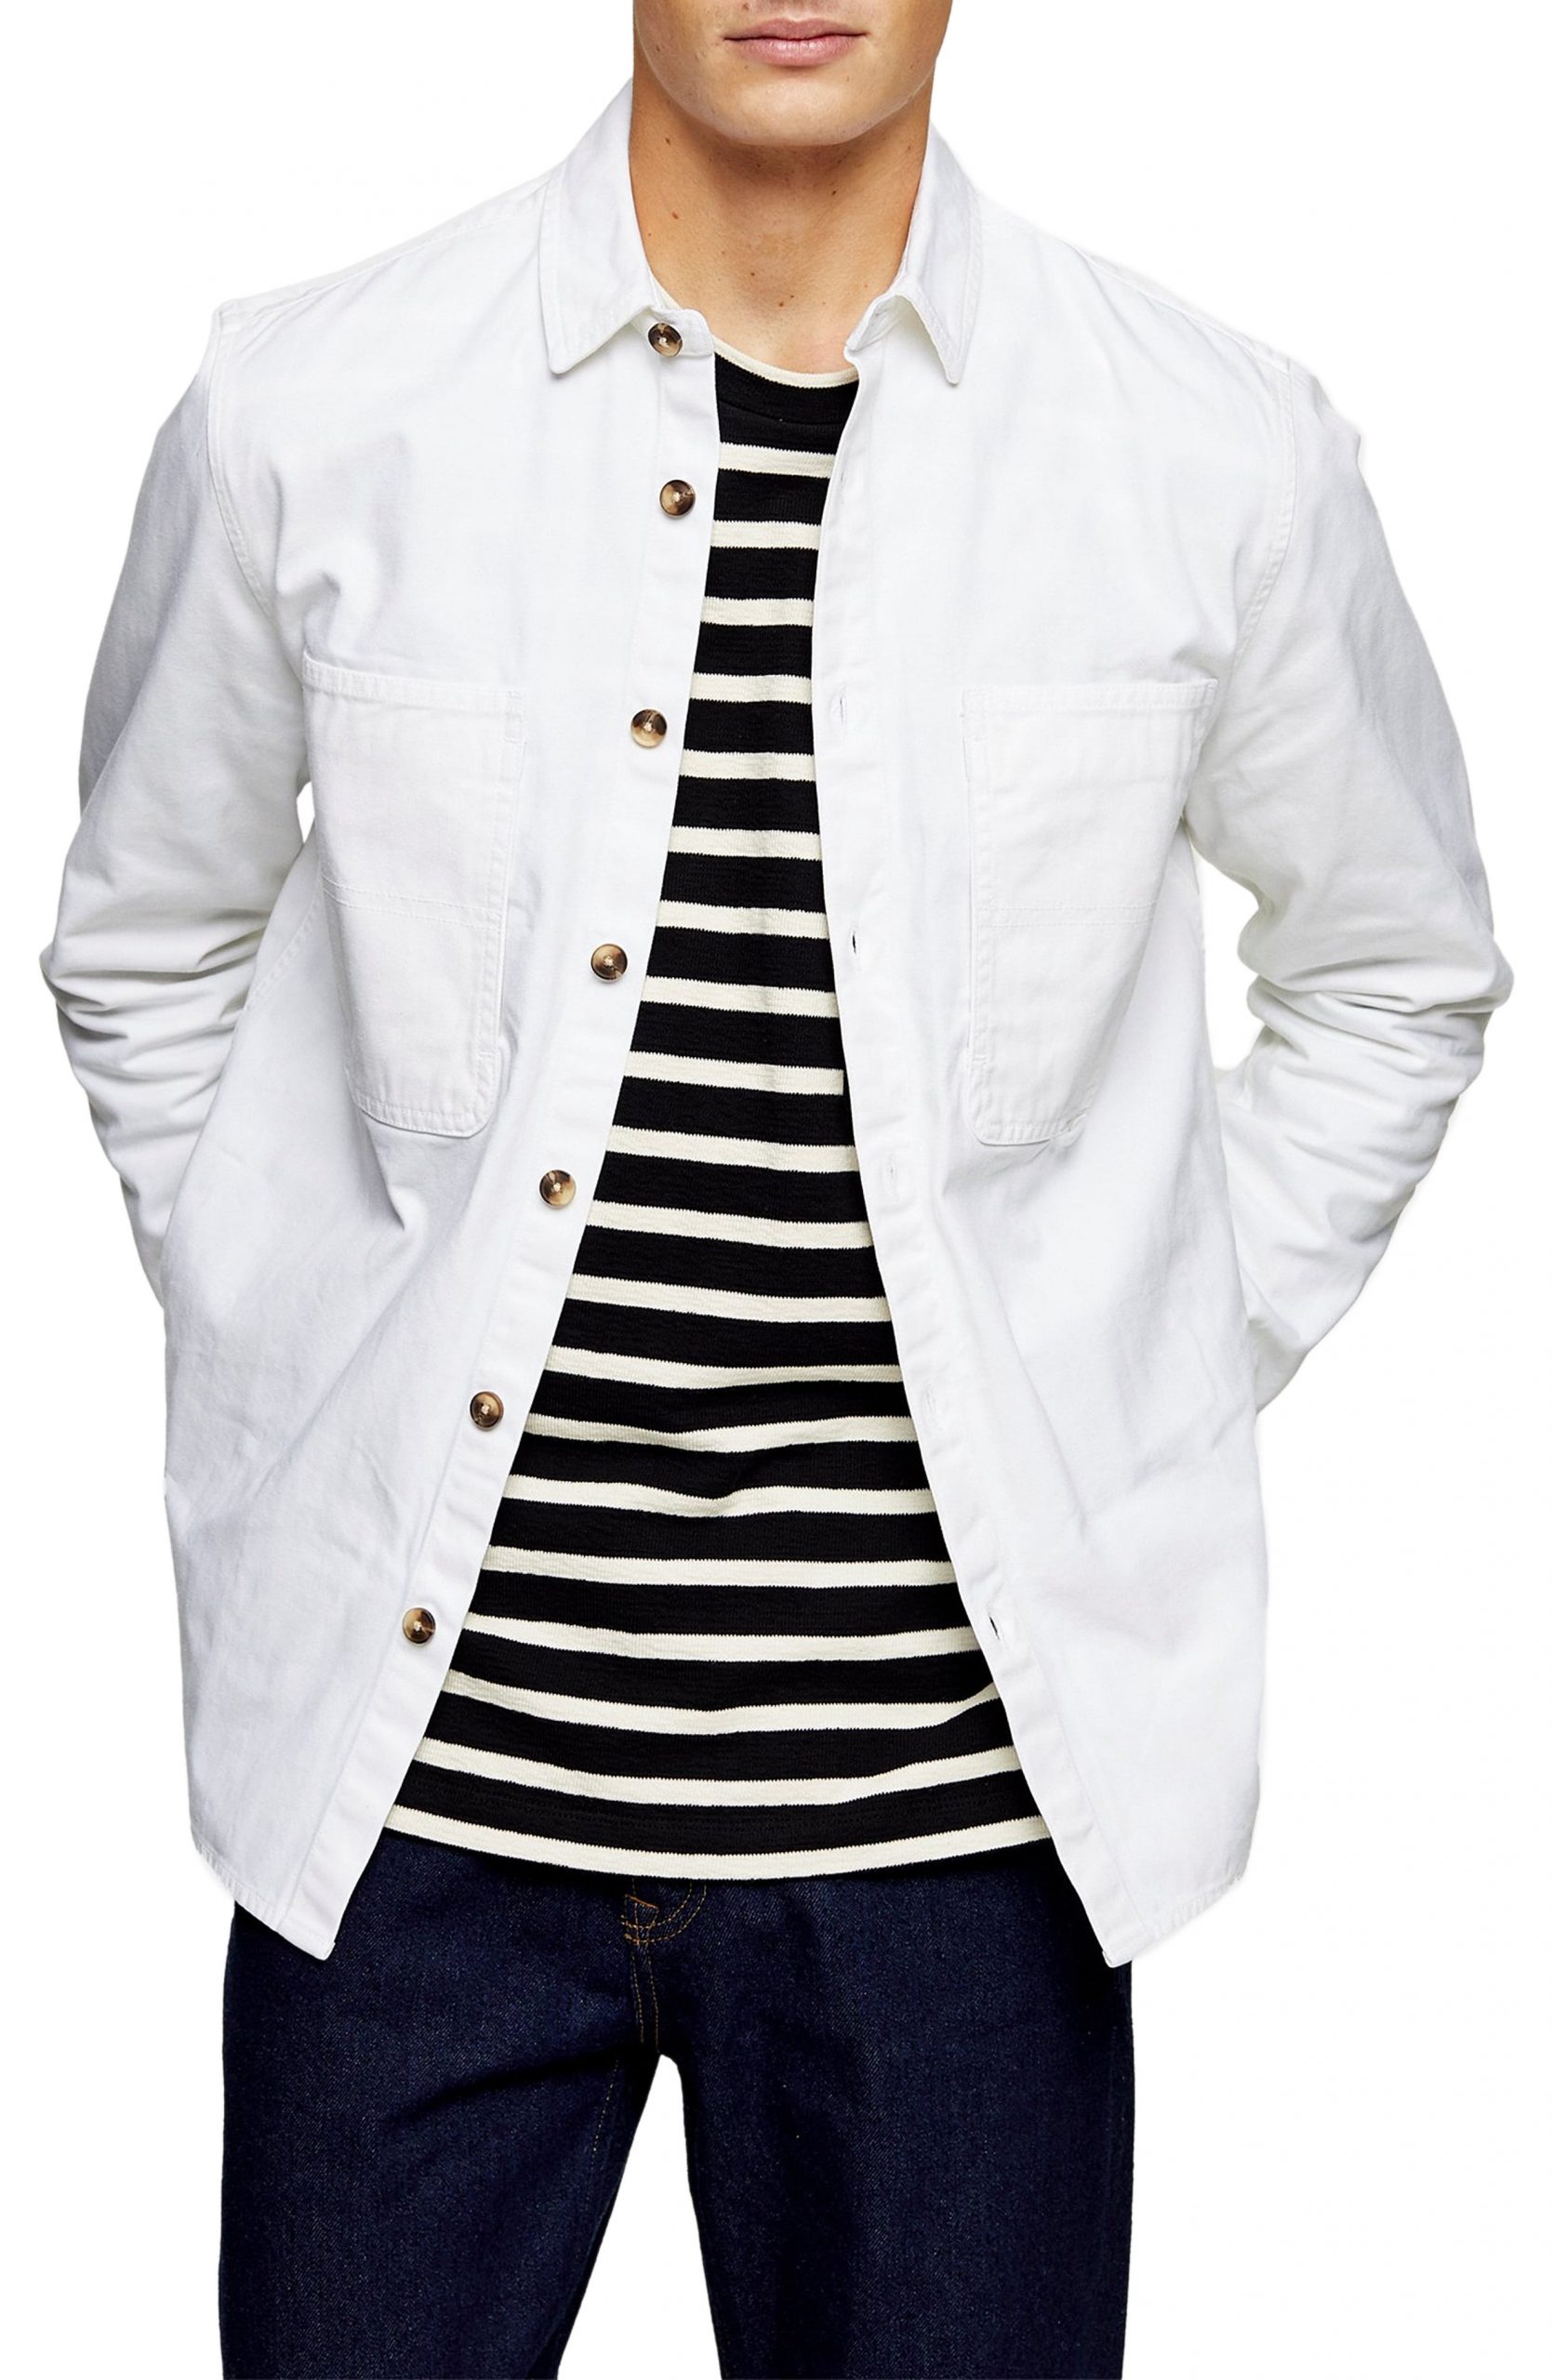 Men’s Topman Herringbone Shirt Jacket, Size Large - White | The Fashionisto